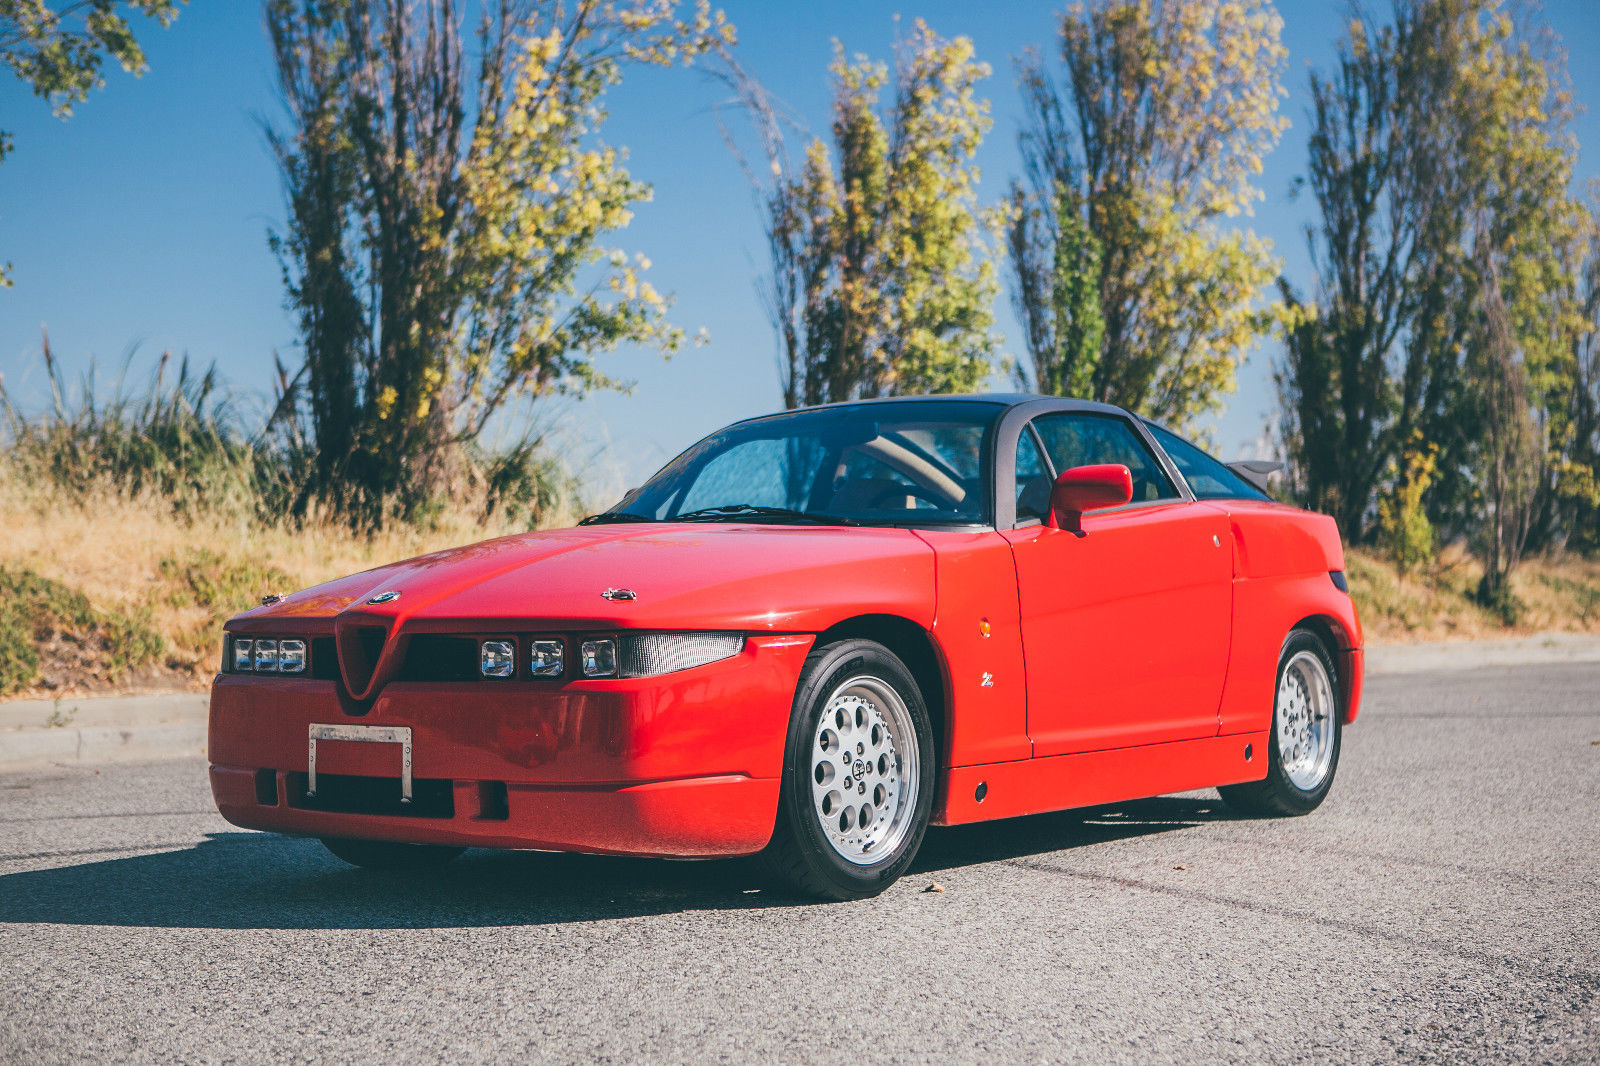 Alfa Romeo SZ GT For Sale on eBay